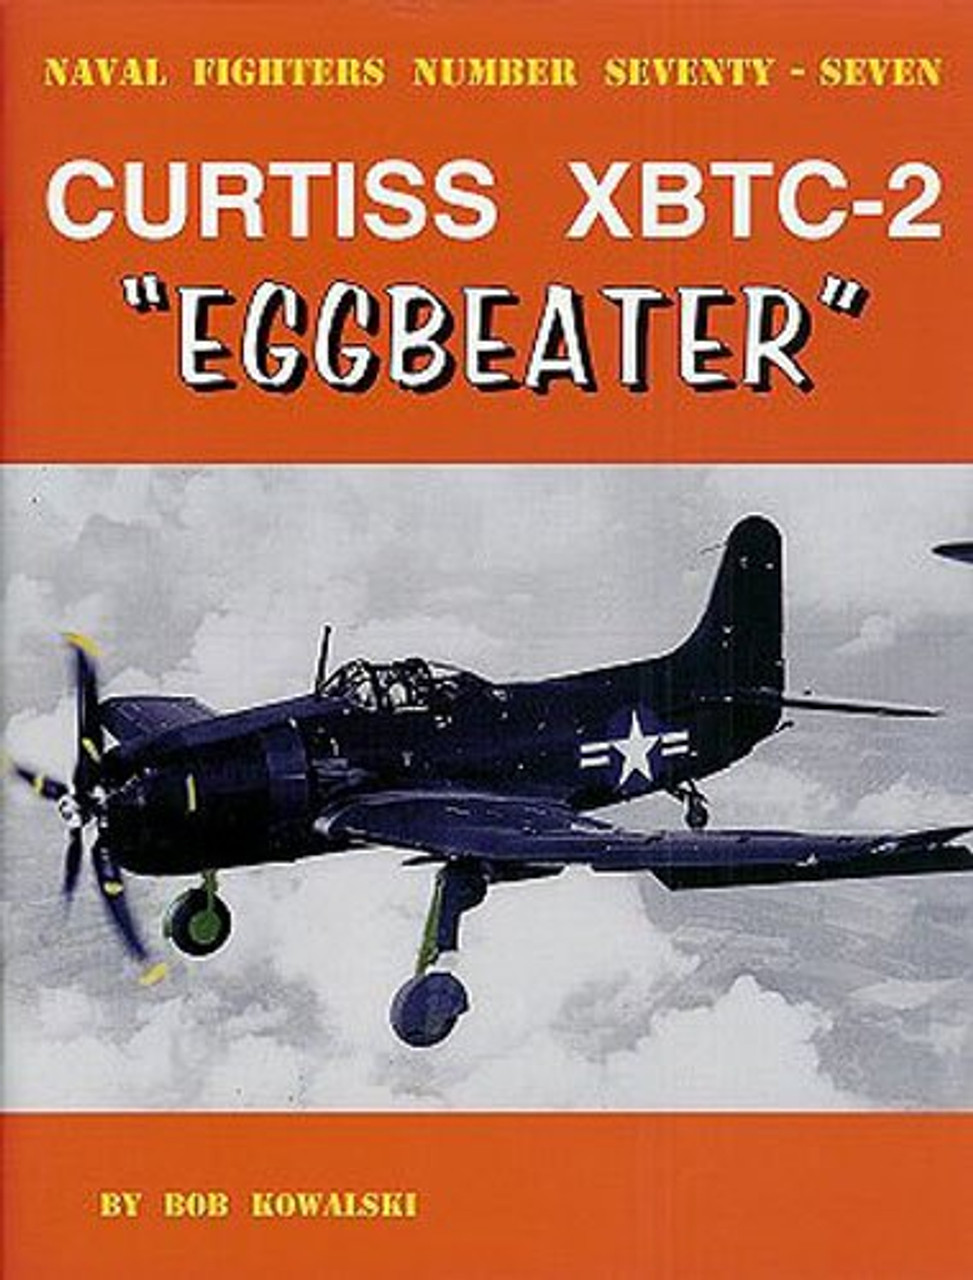 NF077 - Curtiss XBTC-2 "Eggbeater"